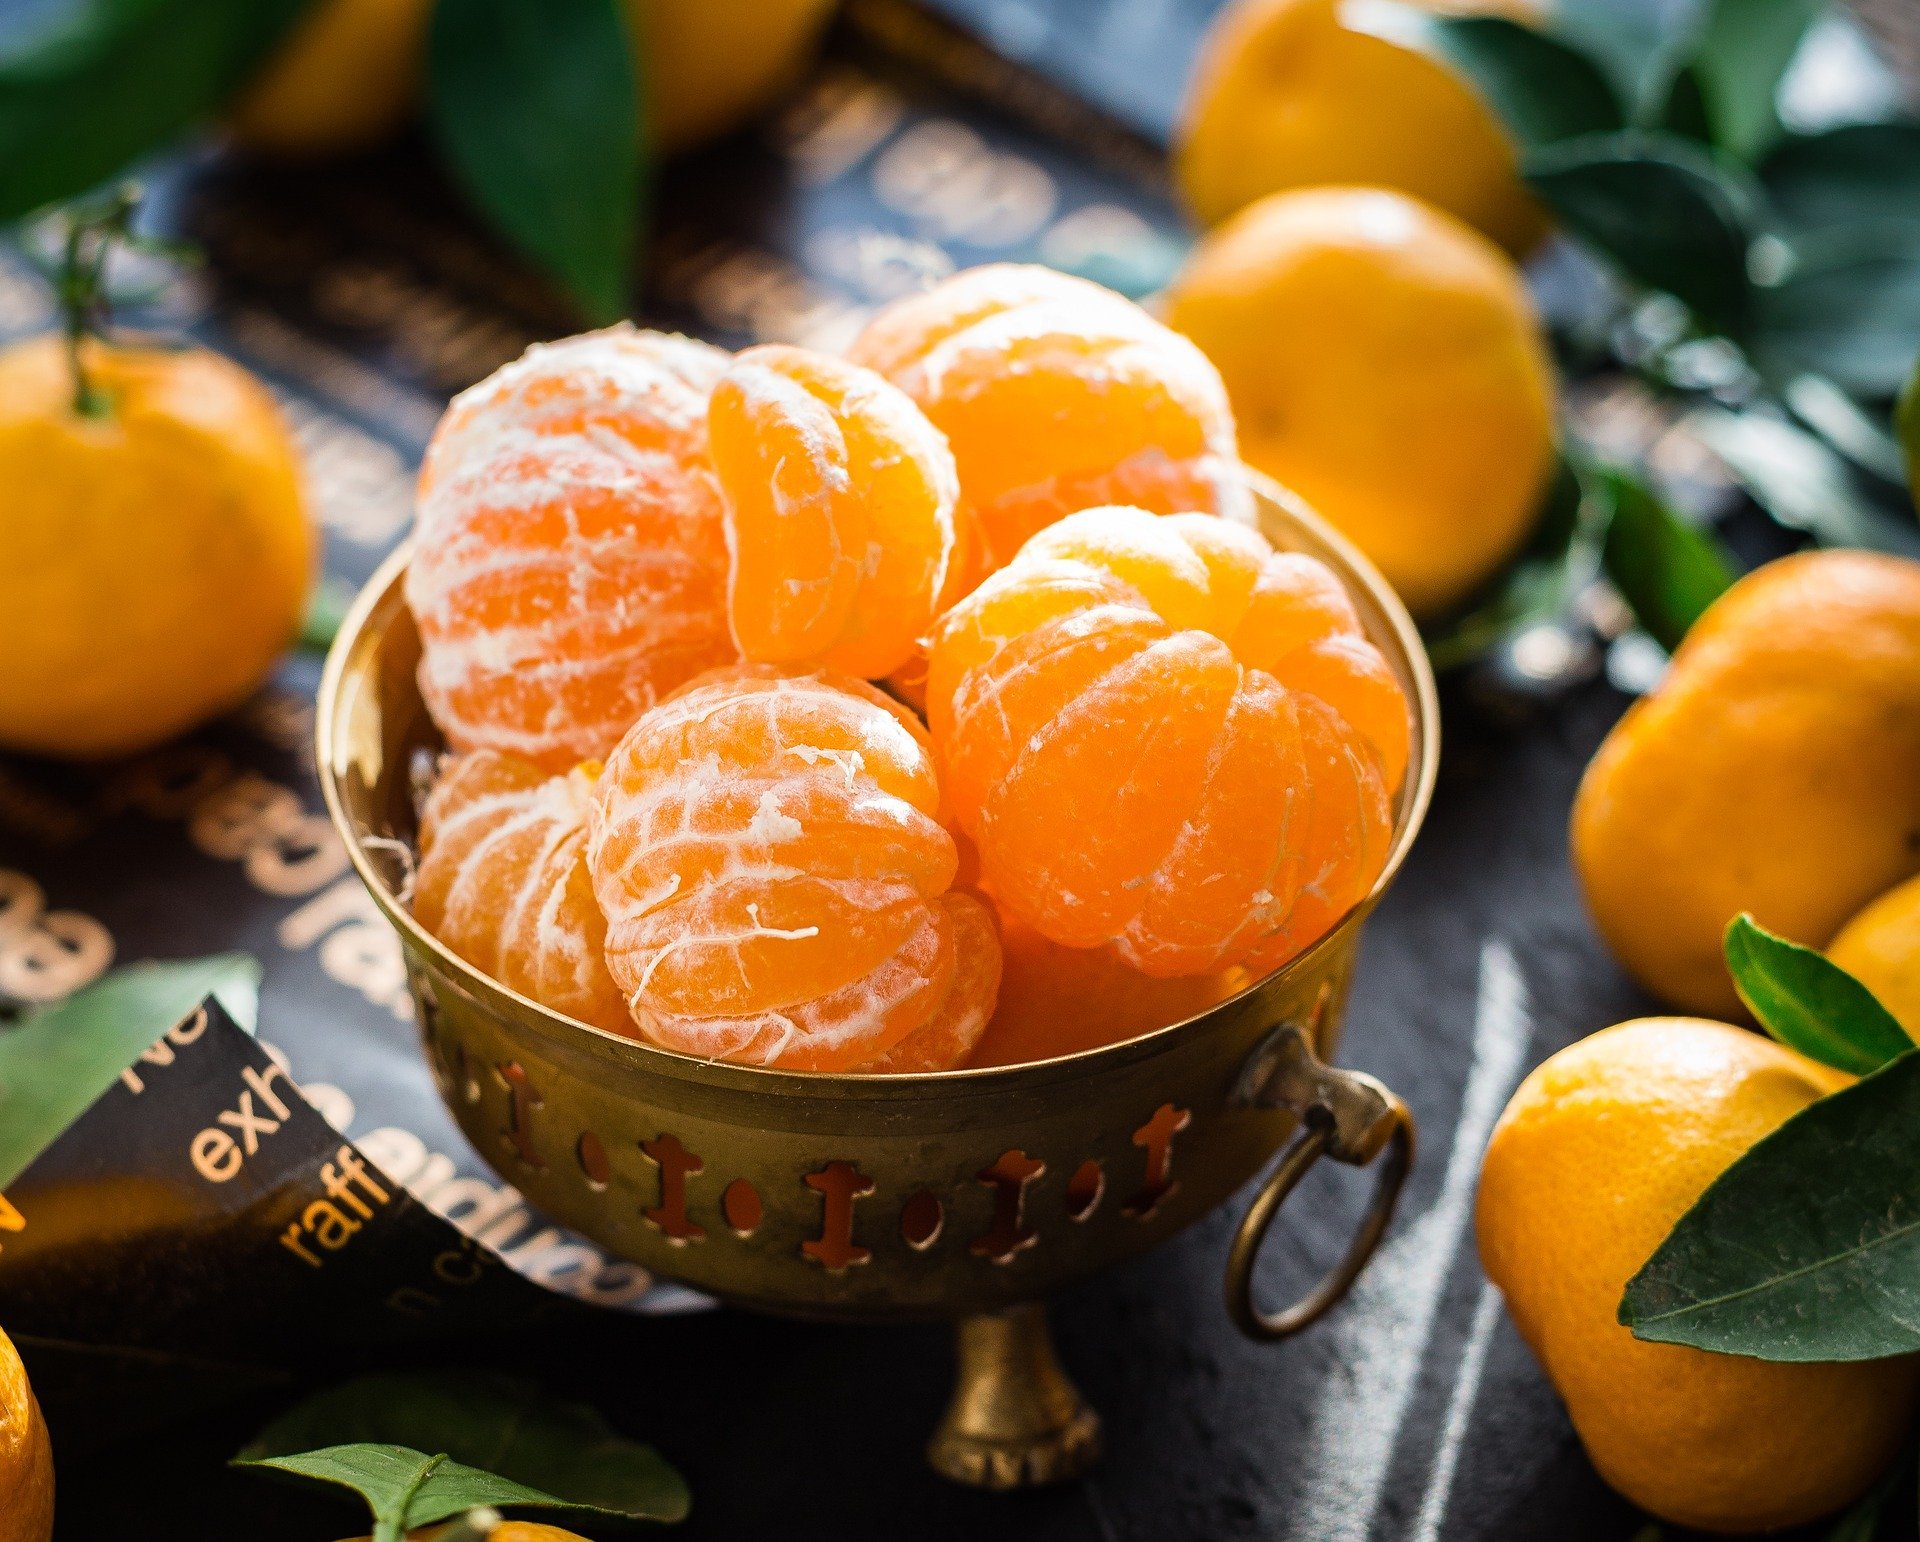 Oranges | Source: Pixabay